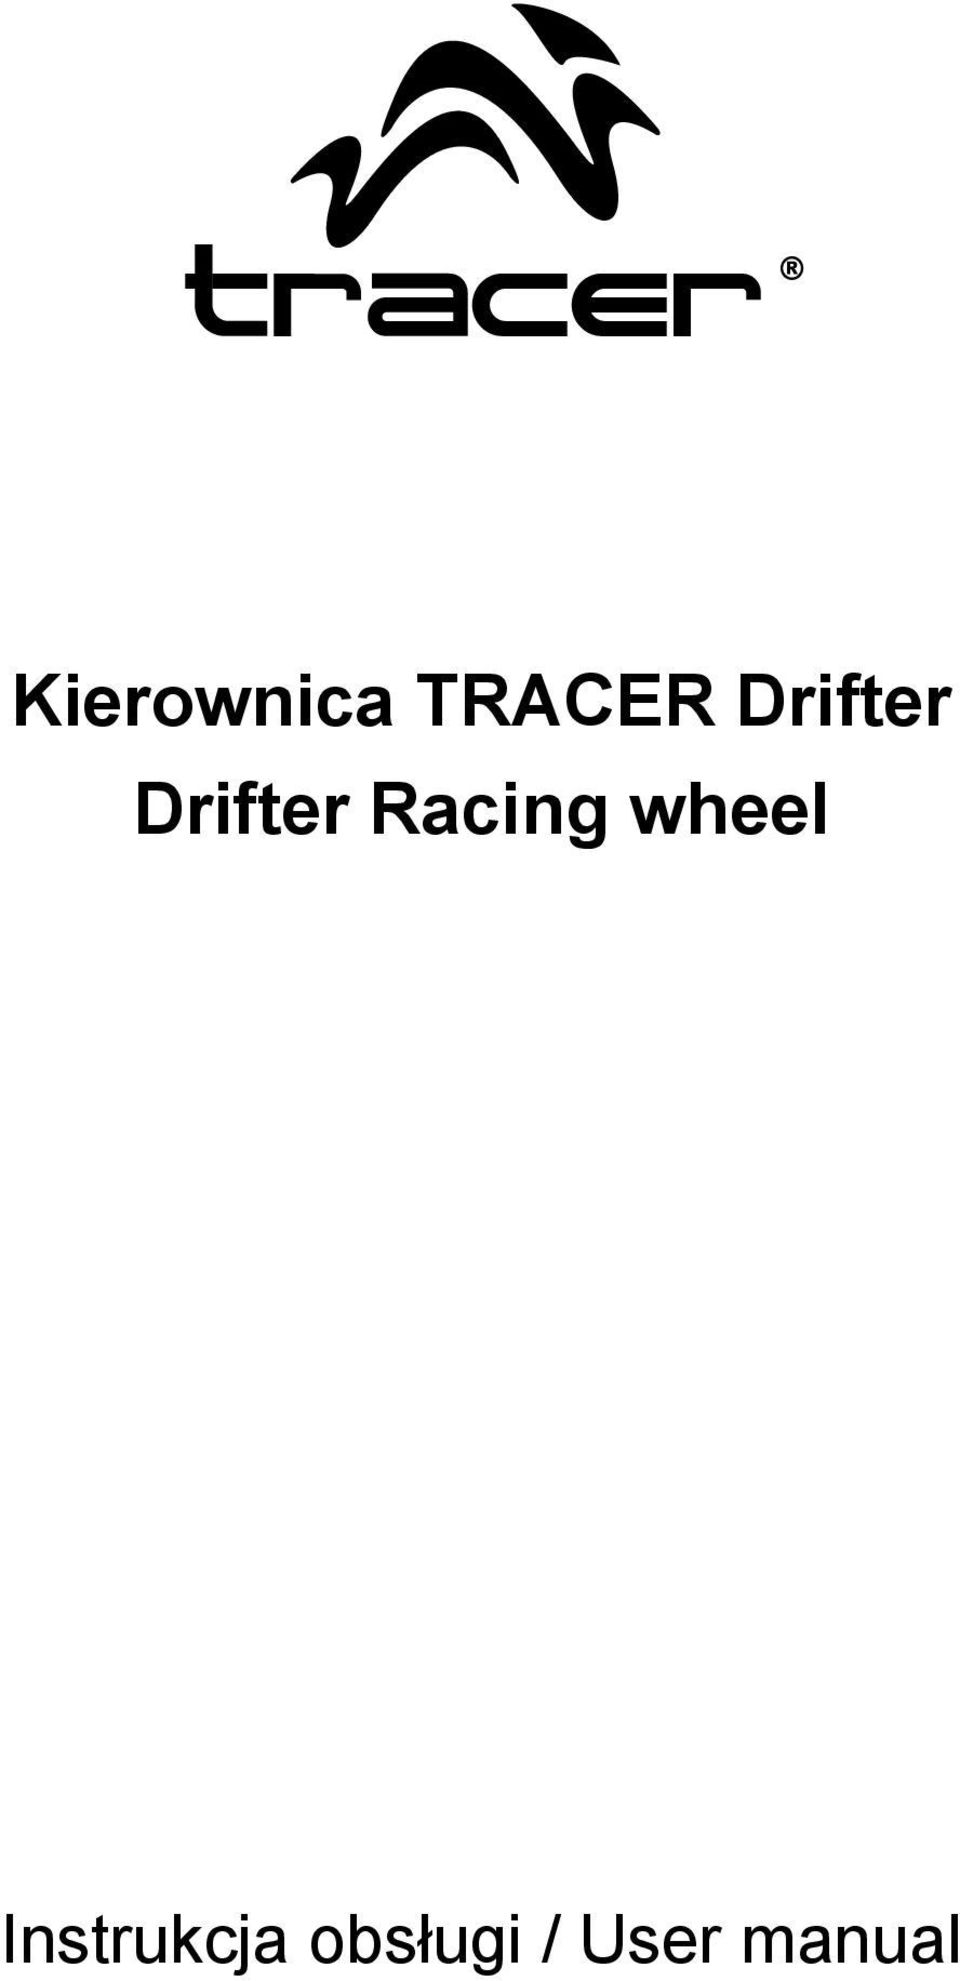 Racing wheel